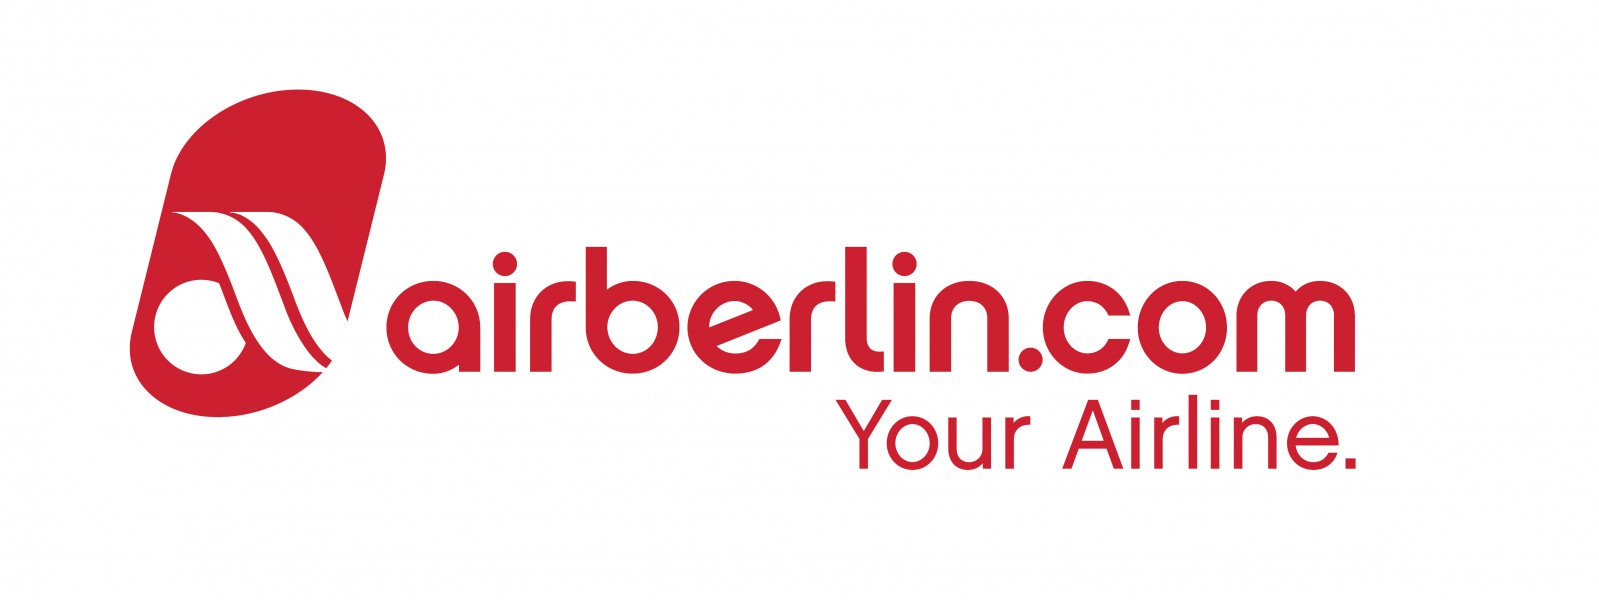 Logo airberlin com 2009